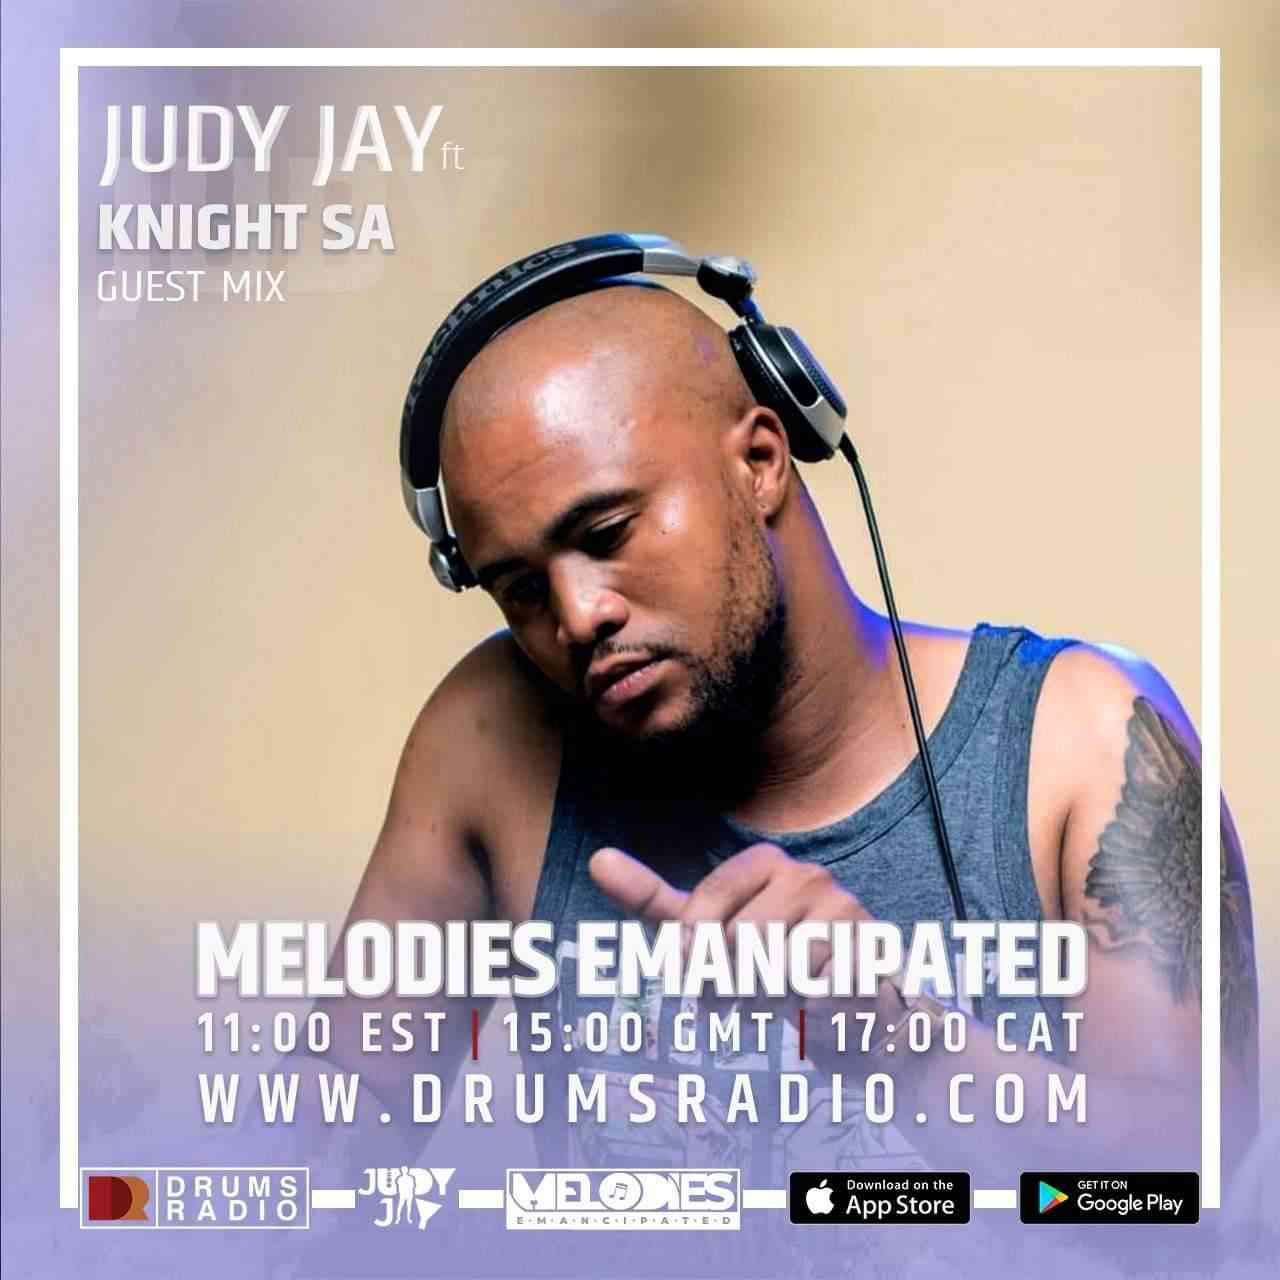 KnightSA89 Melodies Emancipated (Guest Mix) 